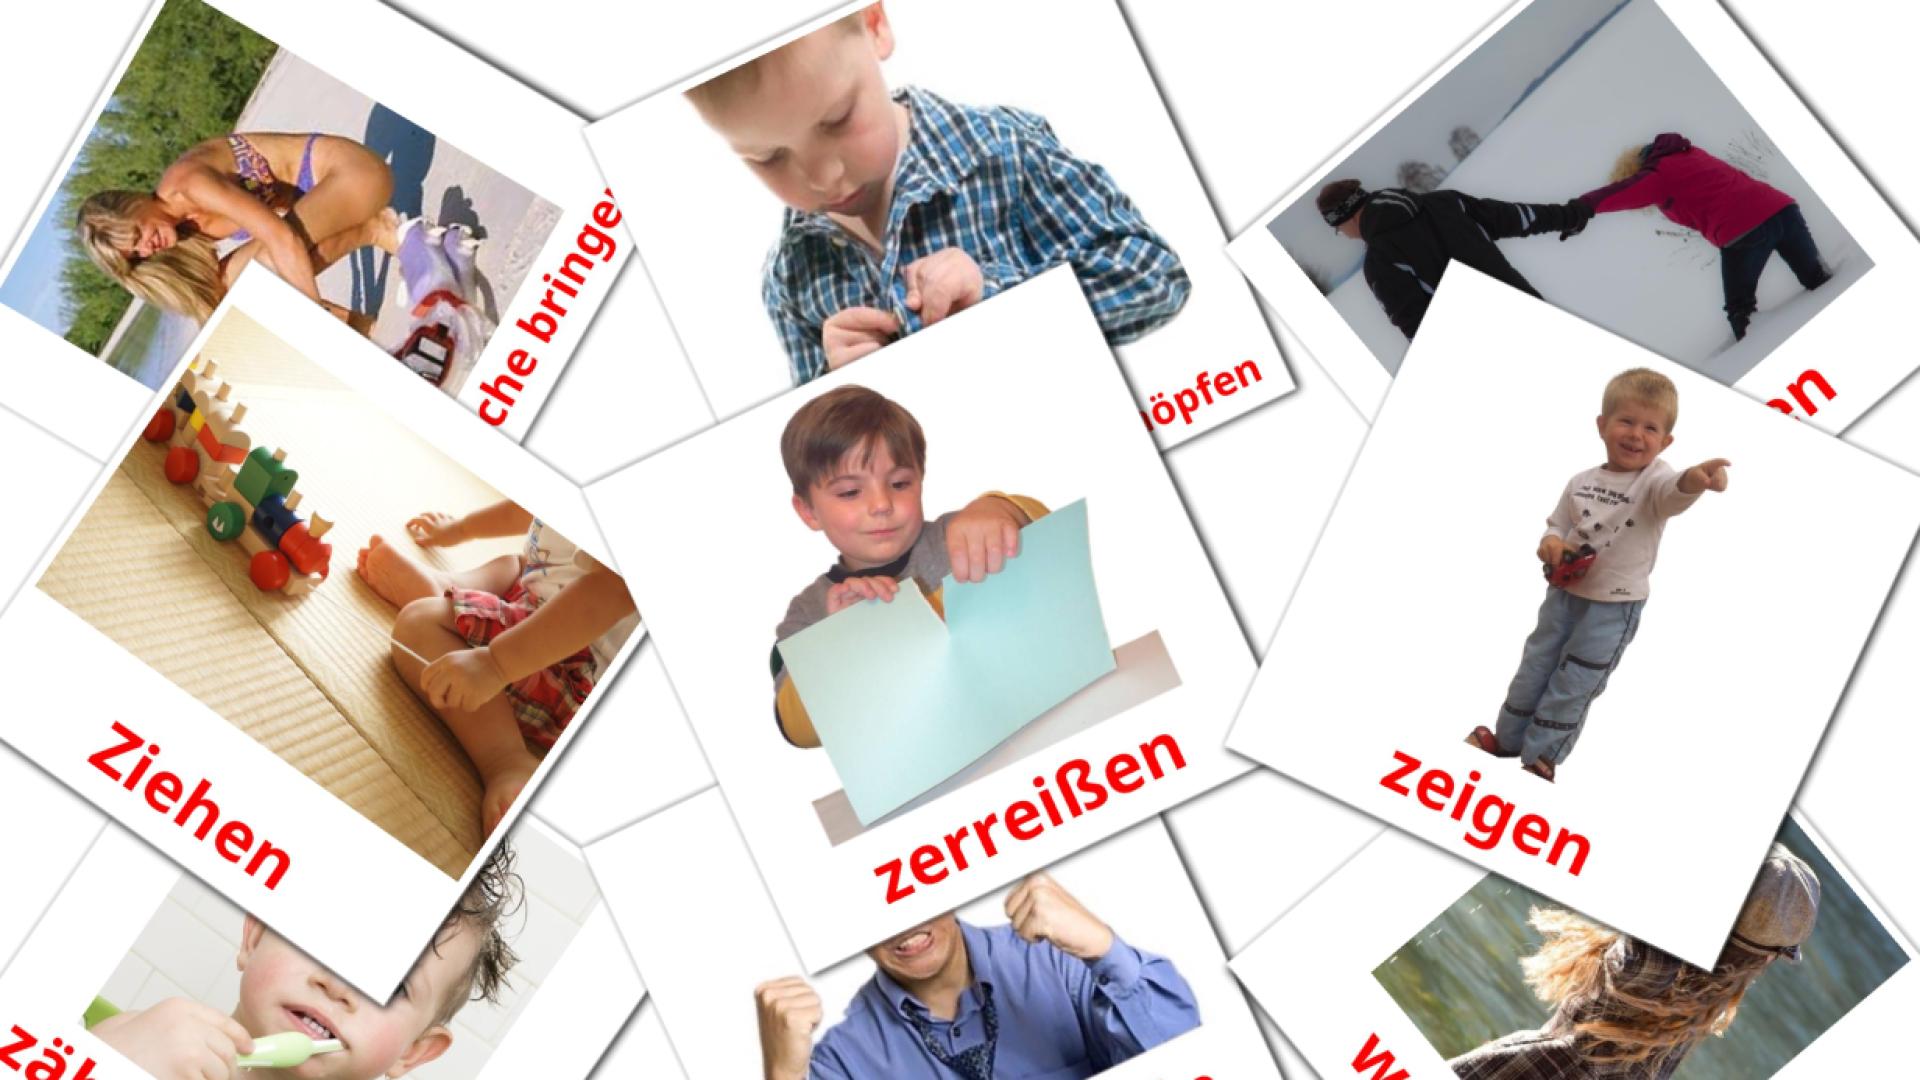 Verben german vocabulary flashcards